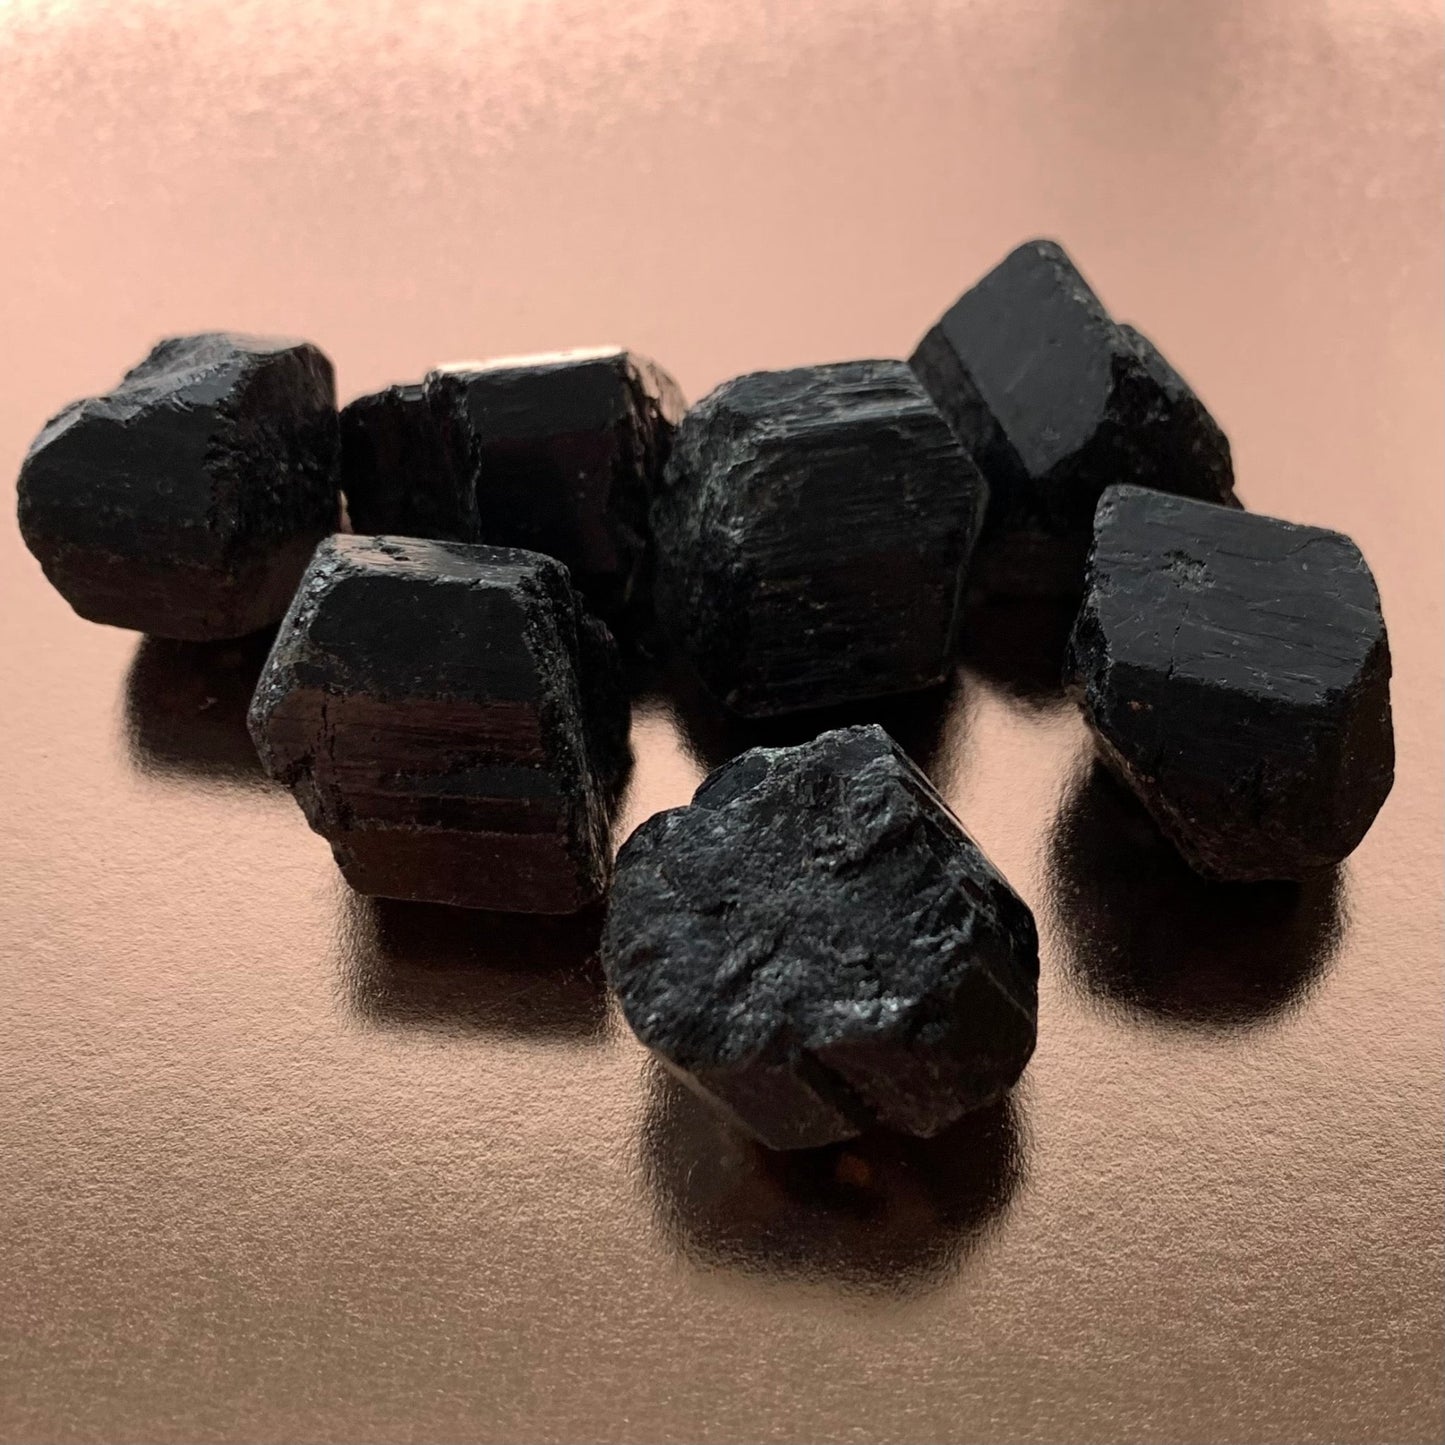 Black Tourmaline Rough Tumble - Conscious Crystals New Zealand Crystal and Spiritual Shop